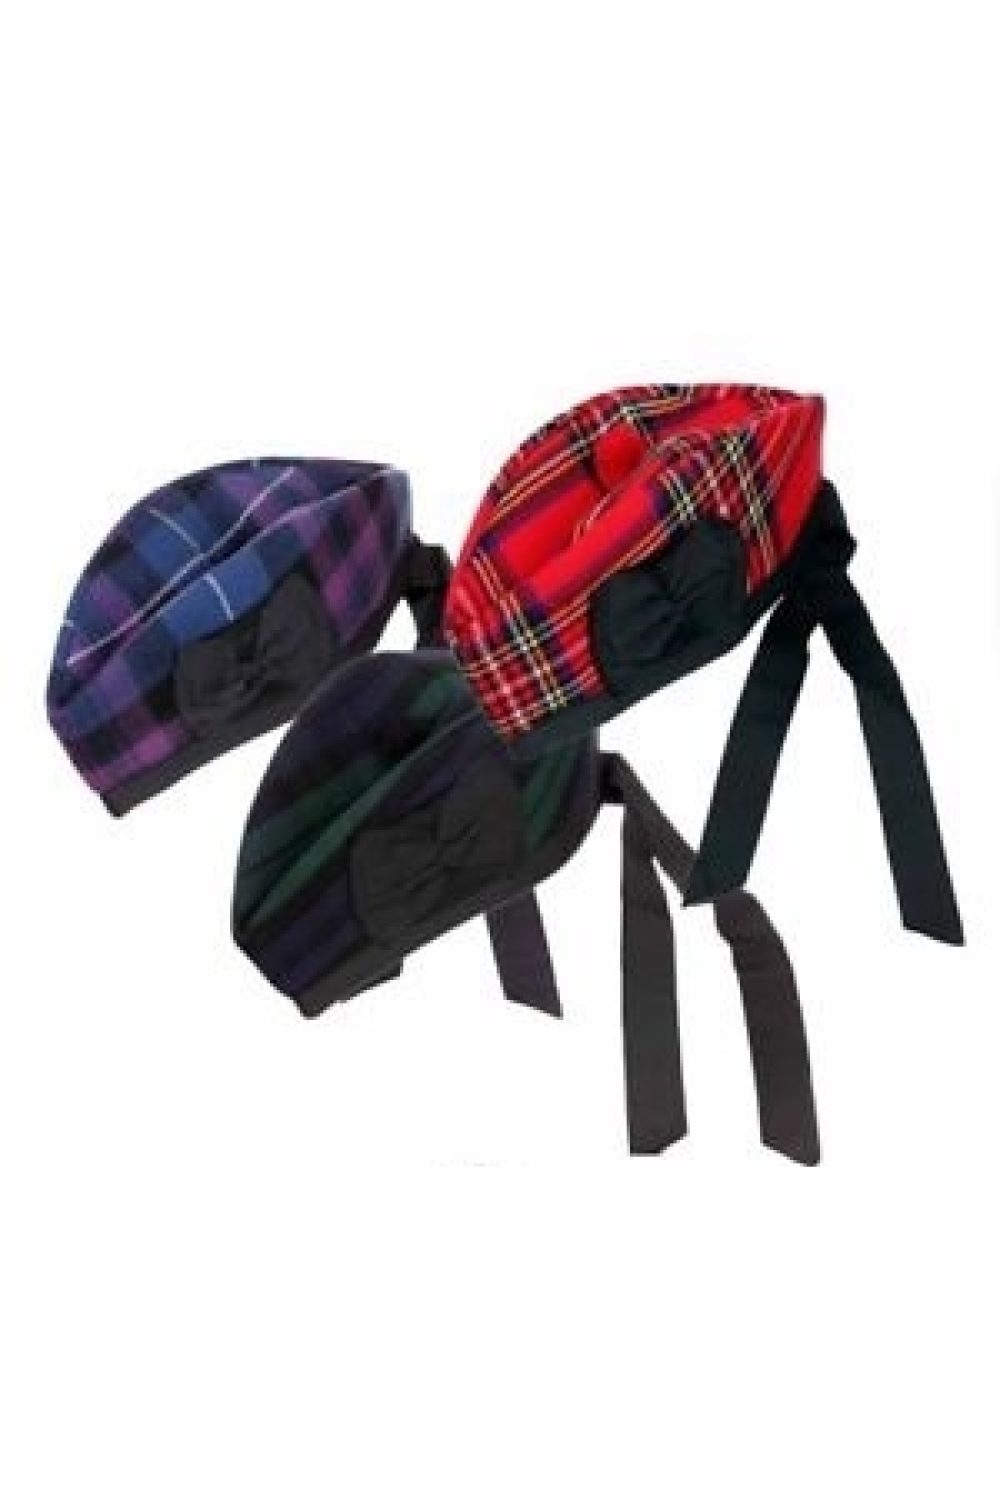 Scottish hats, Scottish tartans hats, Highland hats